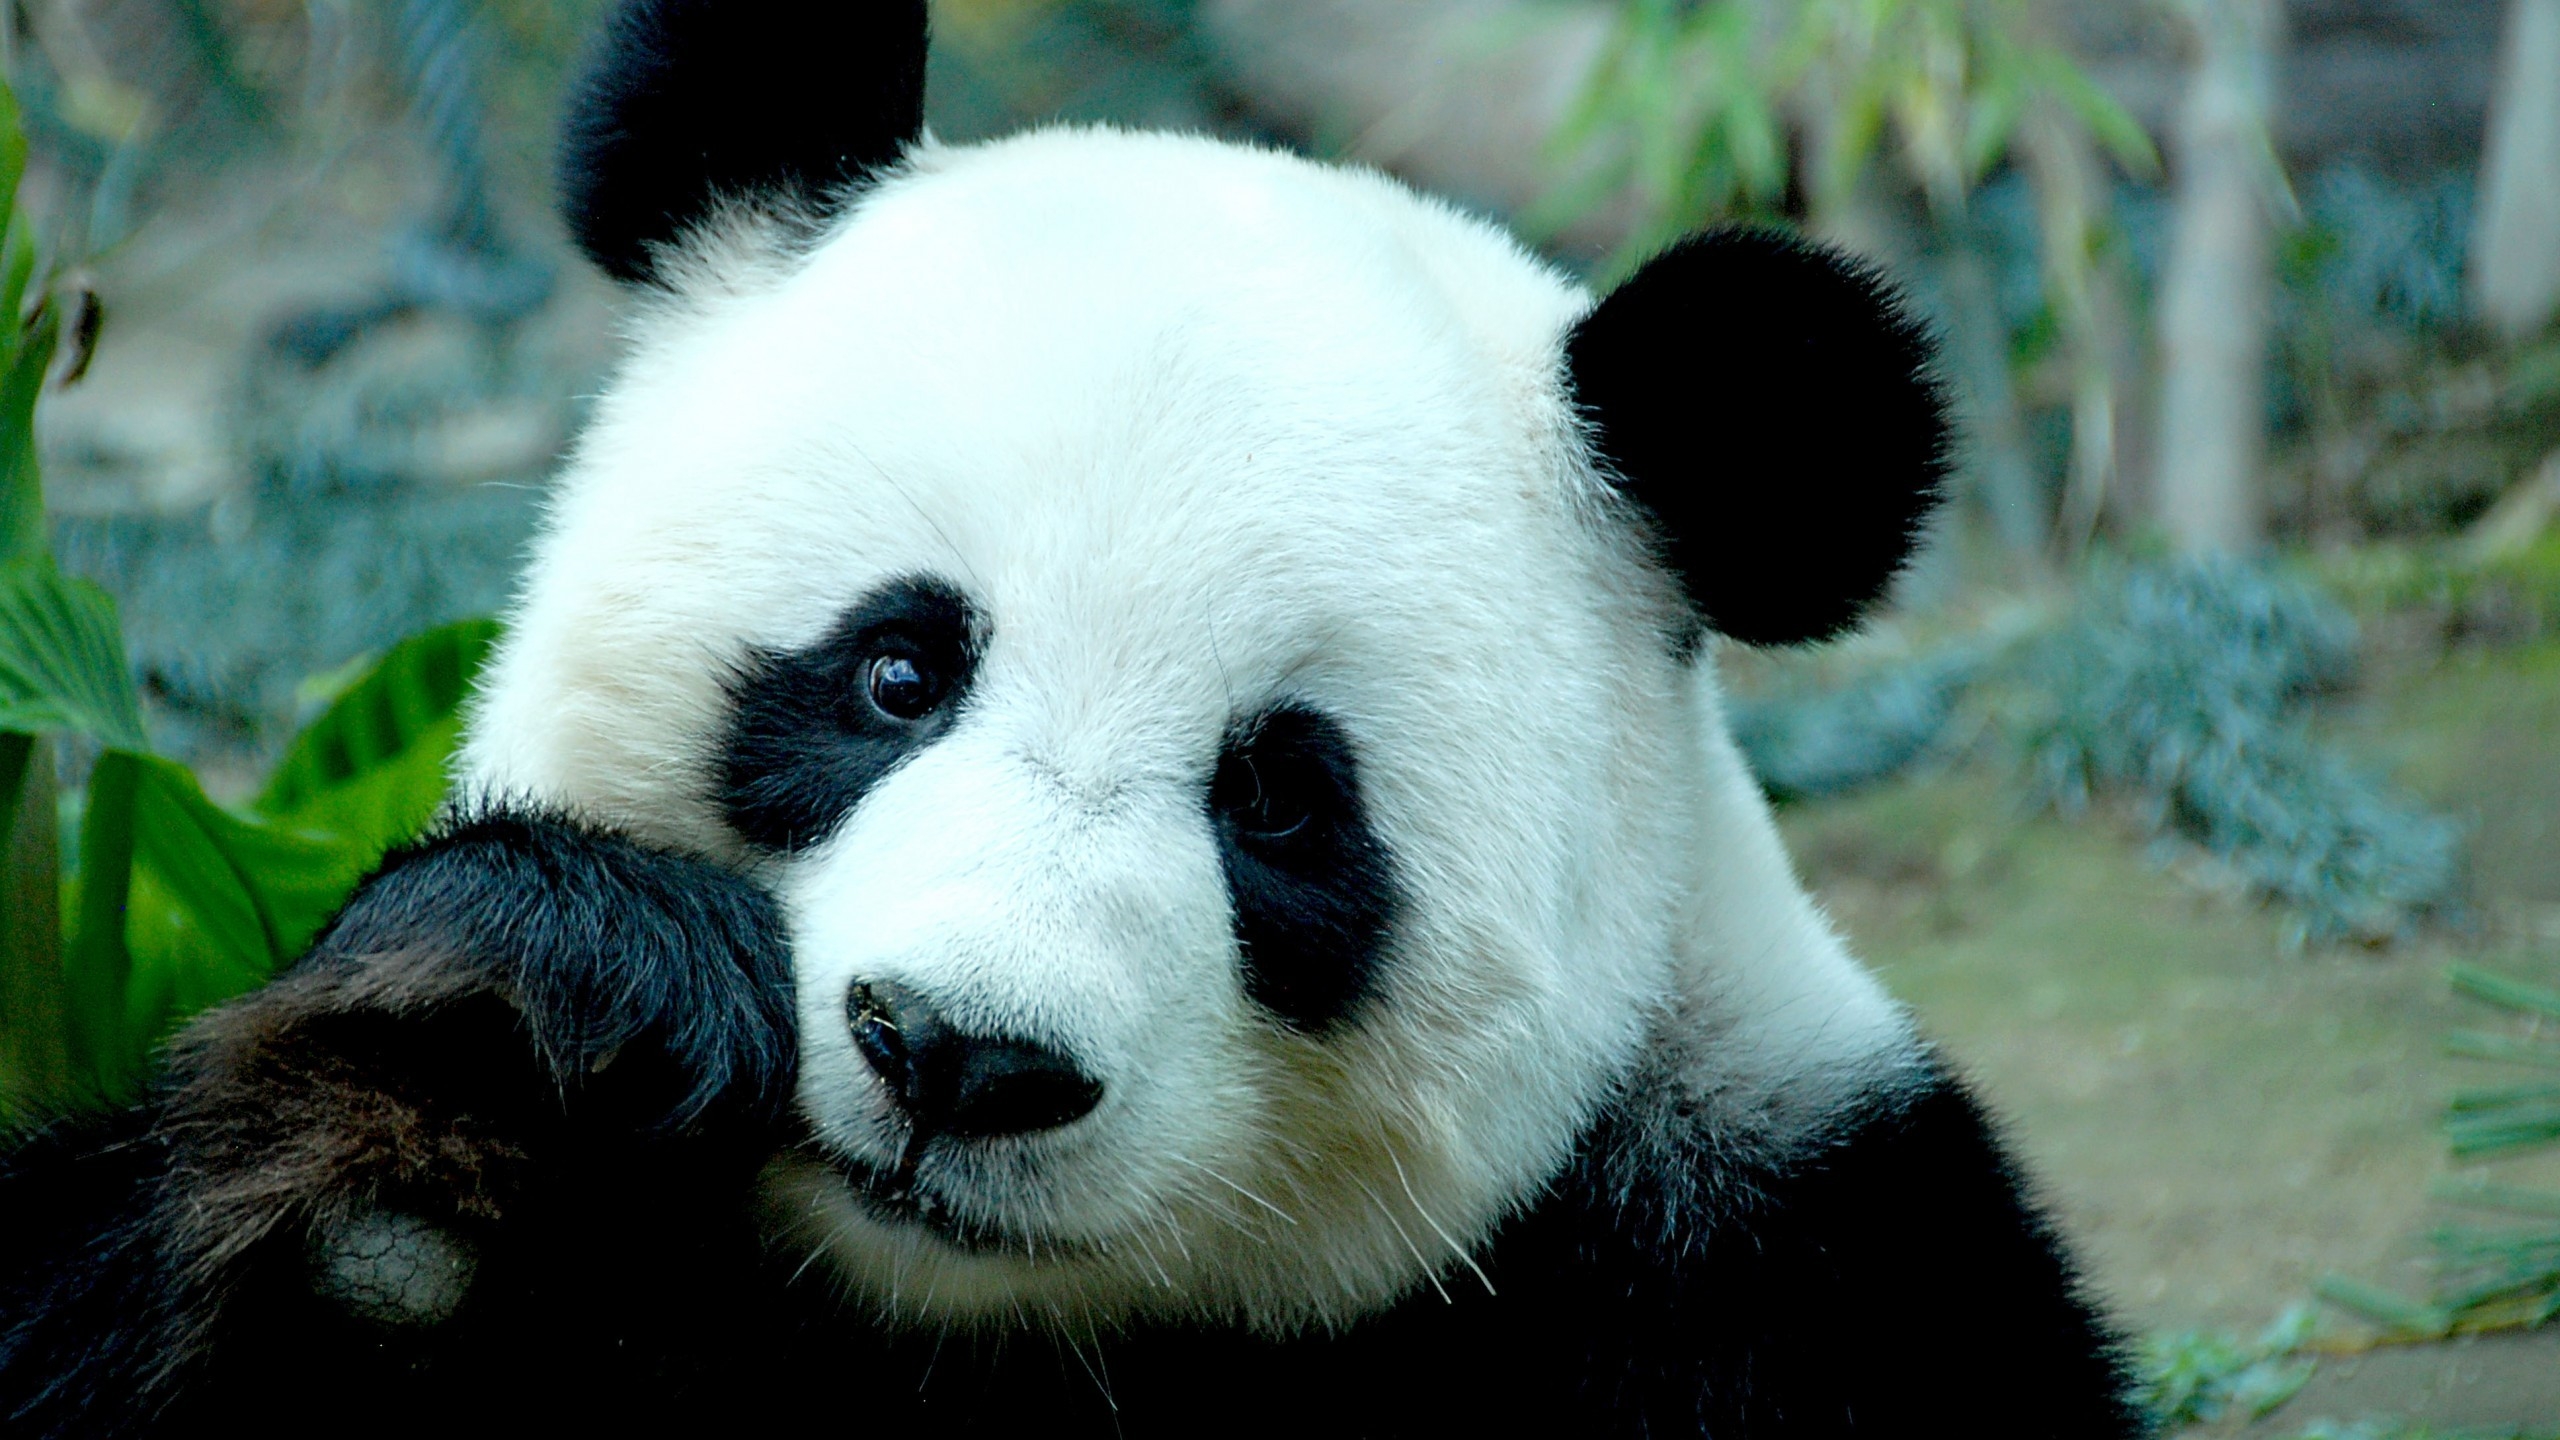 Sad Panda Bear for 2560x1440 HDTV resolution